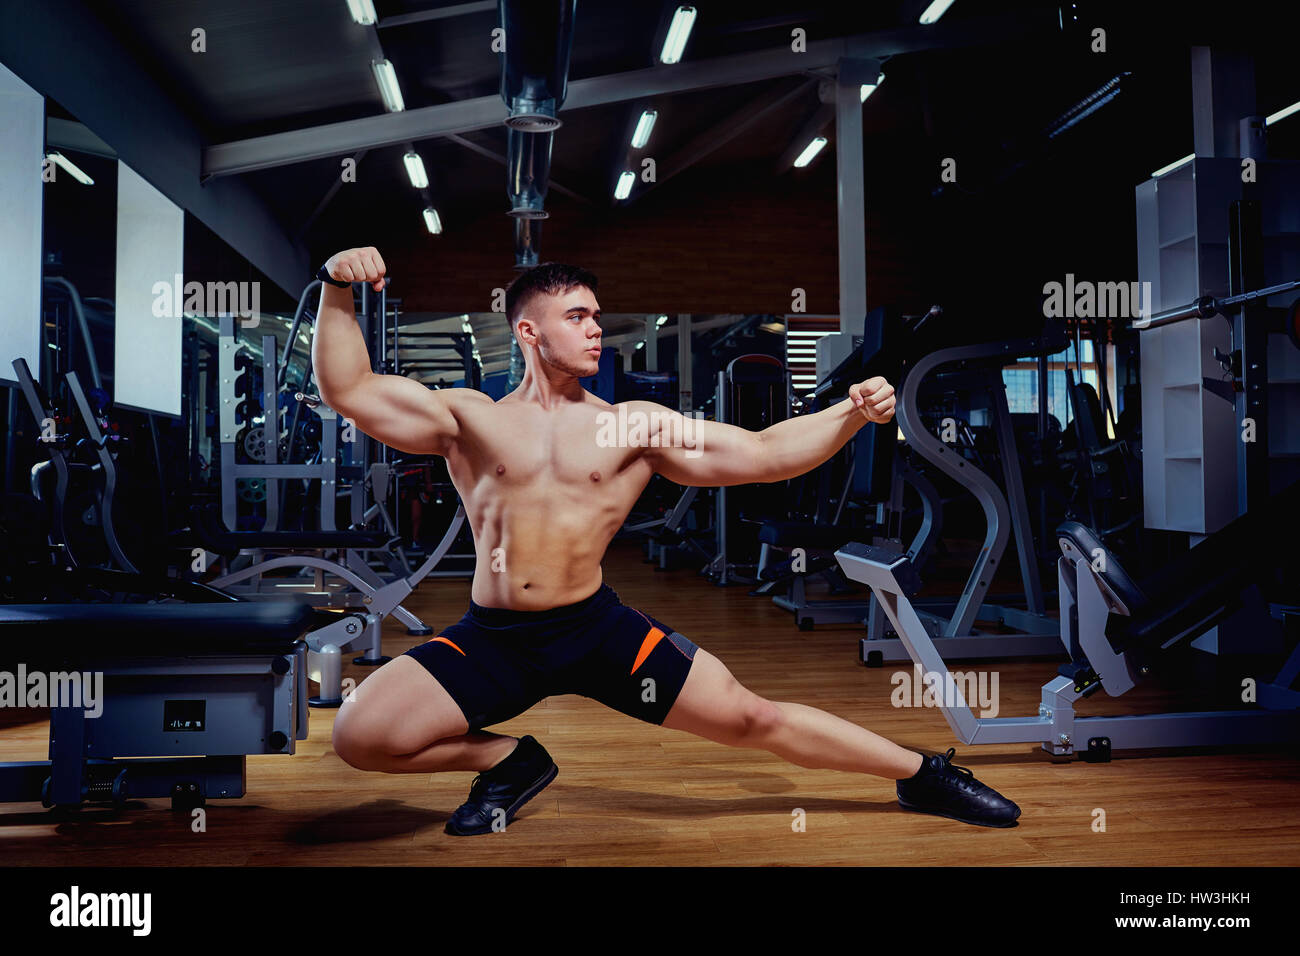 Muscular man posing in gym :: Stock Photography Agency :: Pixel-Shot Studio